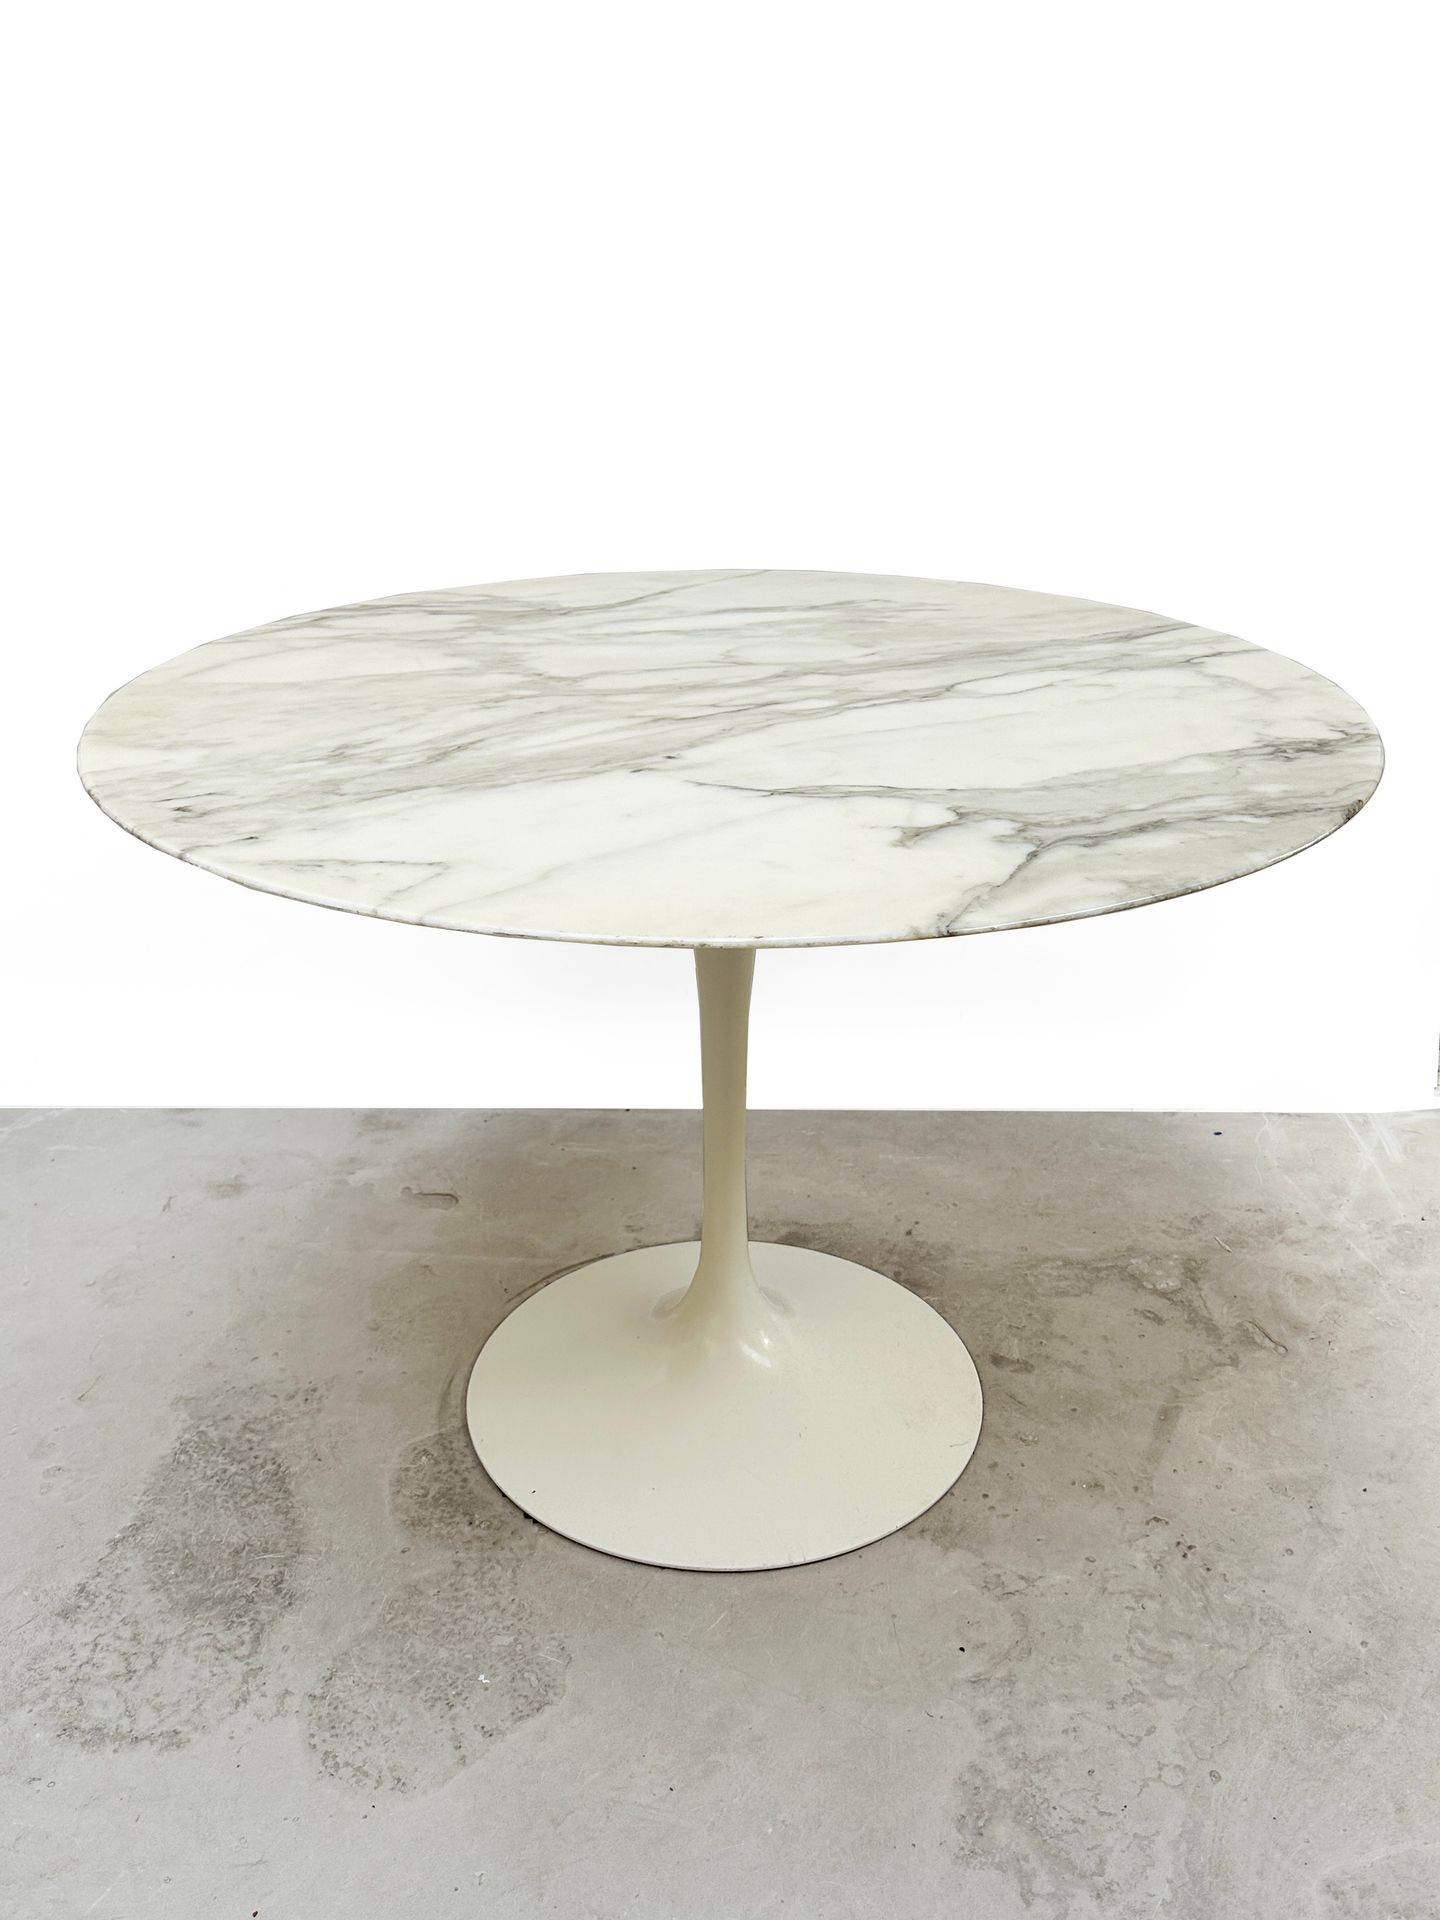 Null 埃罗-萨里宁（1910-1961） 设计师 KNOLL éditeur
圆桌，桌面为卡拉卡塔大理石，中央为白色漆面铸铁 "郁金香 "桌脚
桌腿下有 "&hellip;